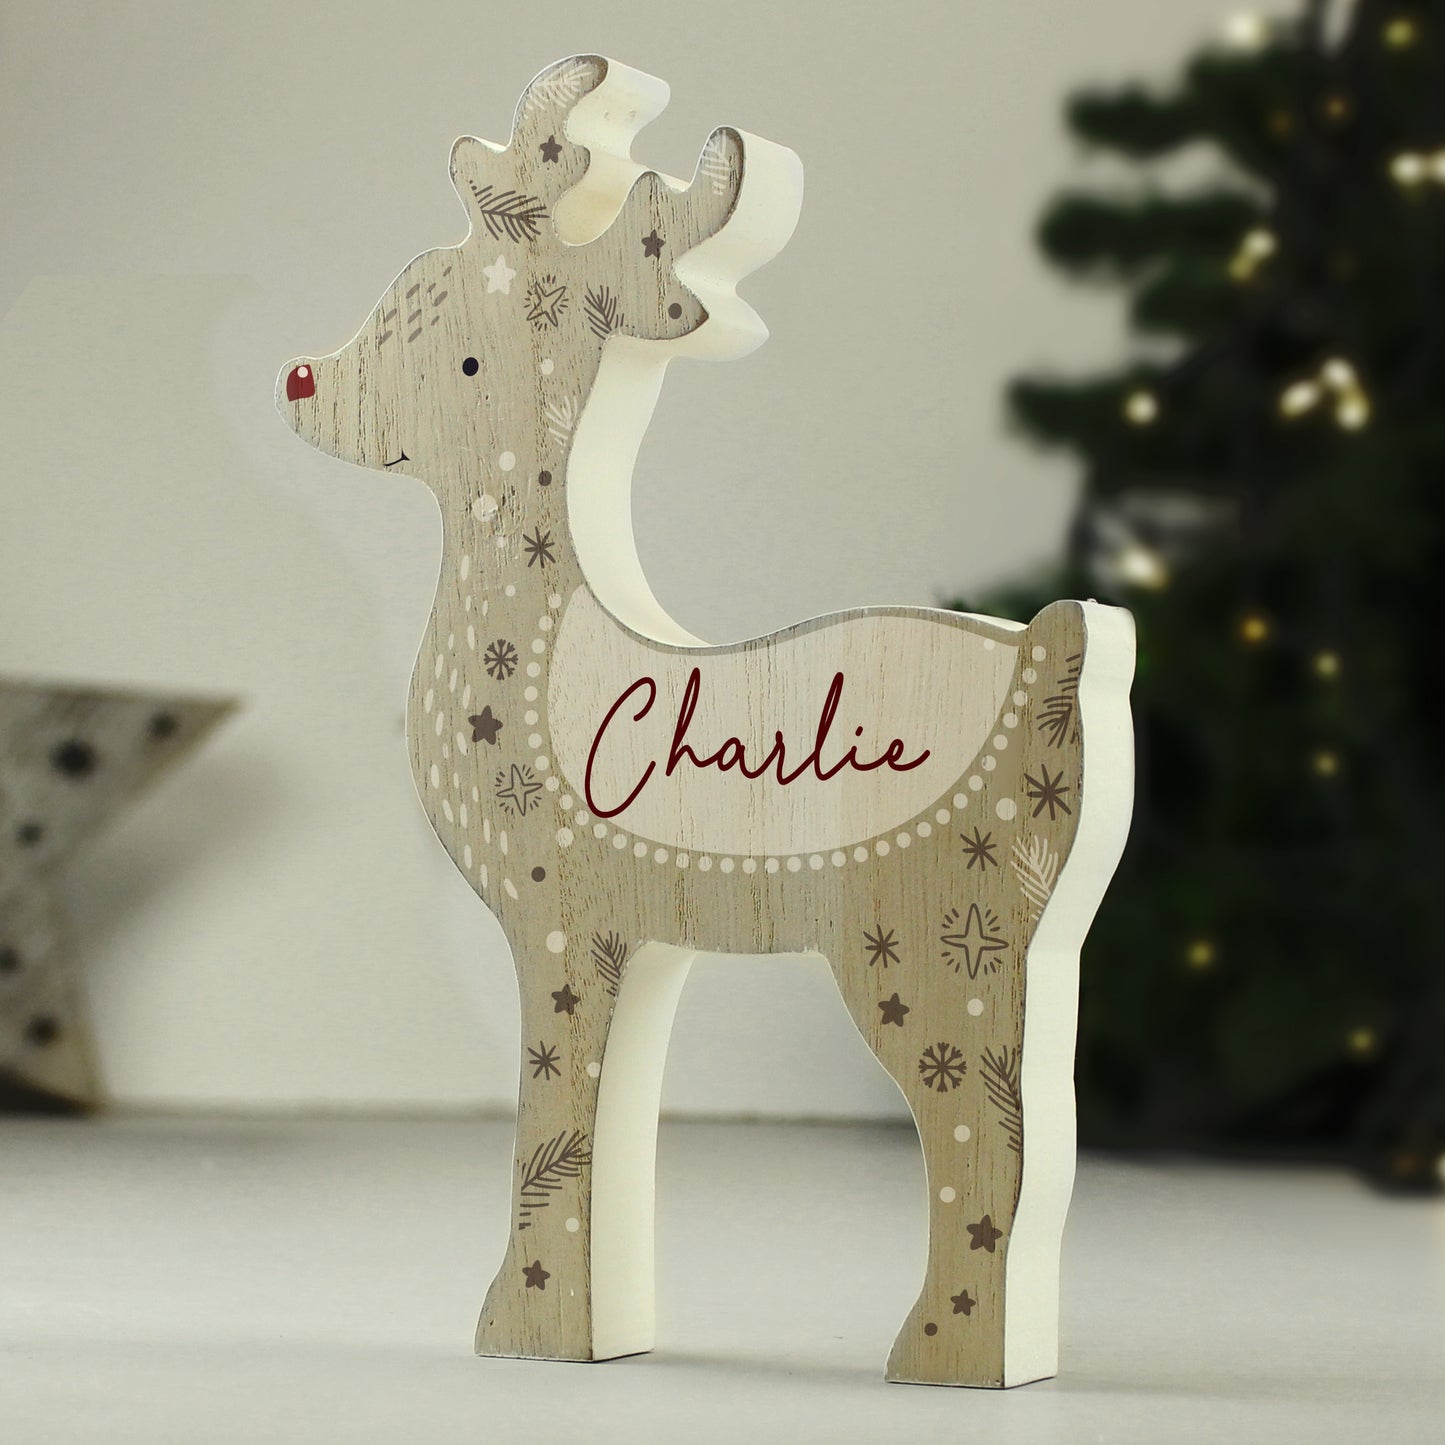 Personalised Red Nosed Reindeer Christmas Ornament